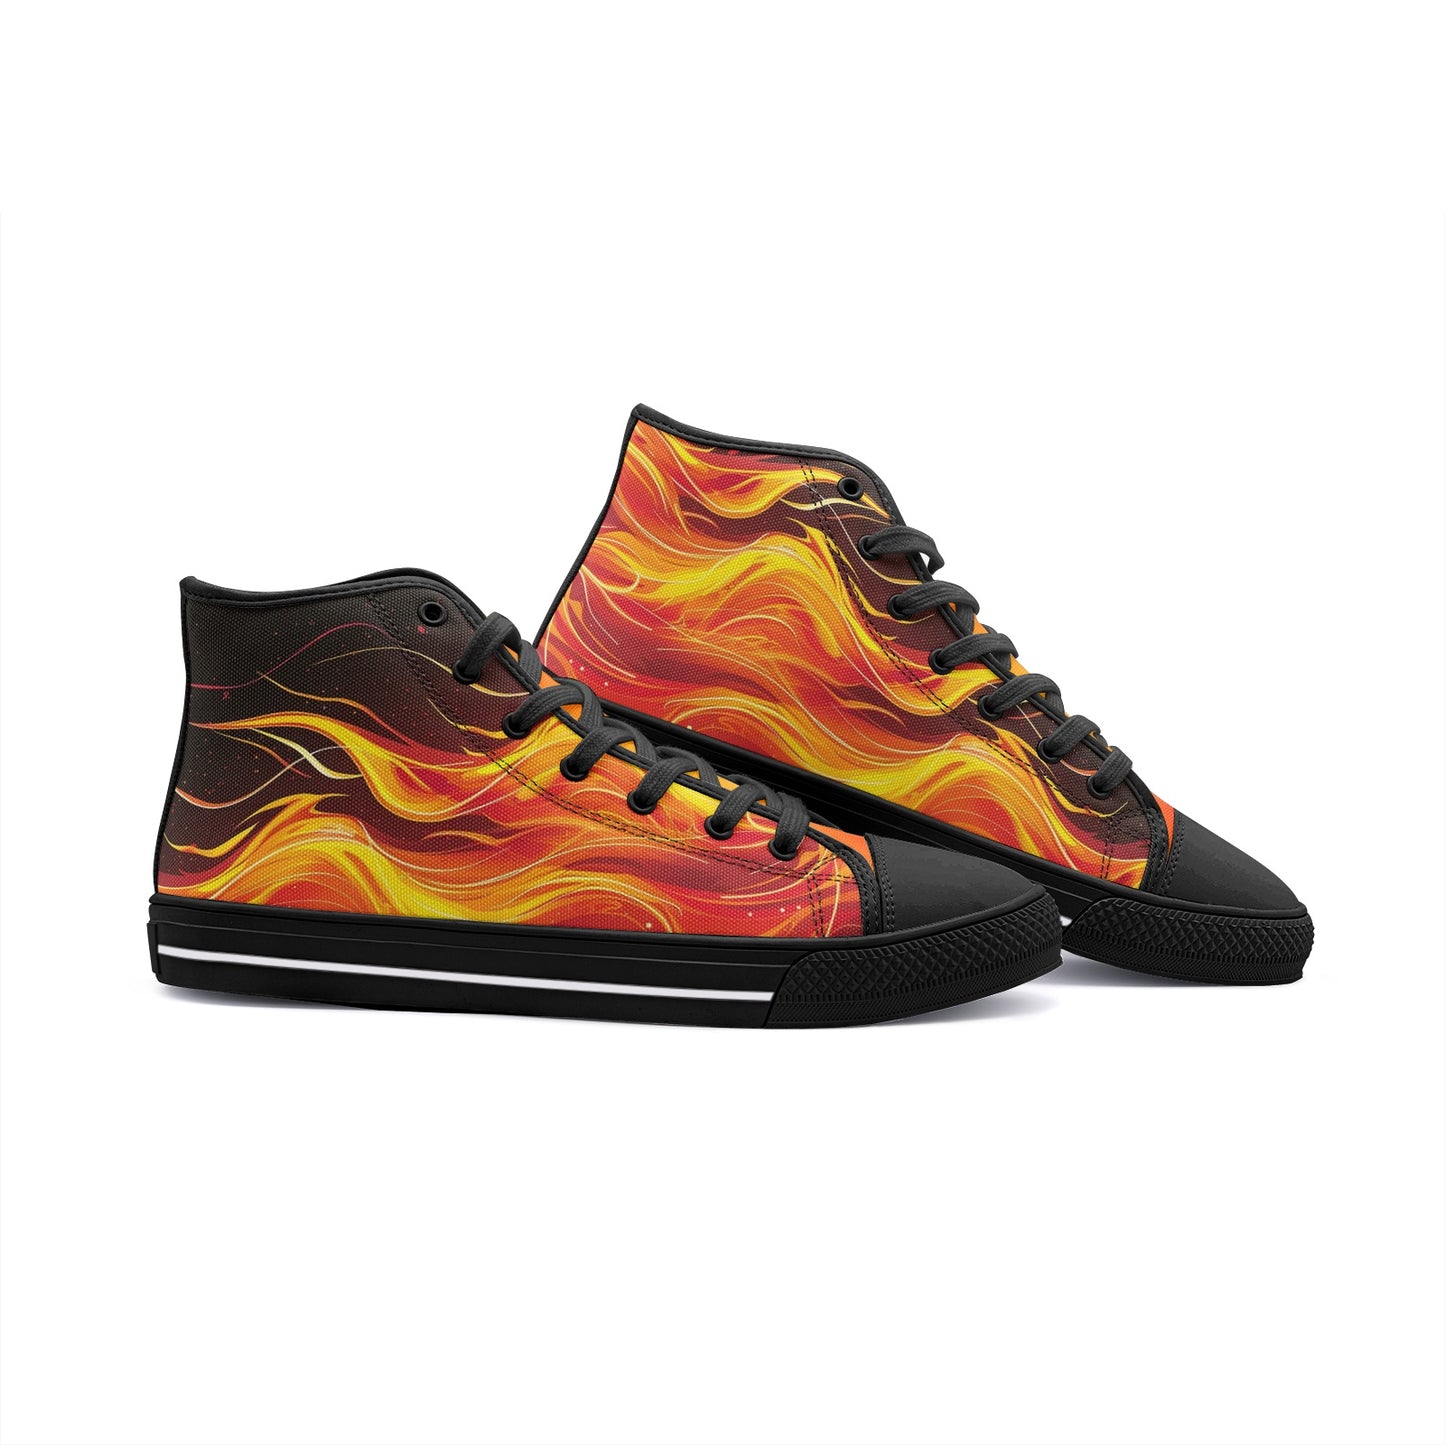 Neduz Blazing Flames High Top Canvas Shoes - Unisex, Durable, Stylish